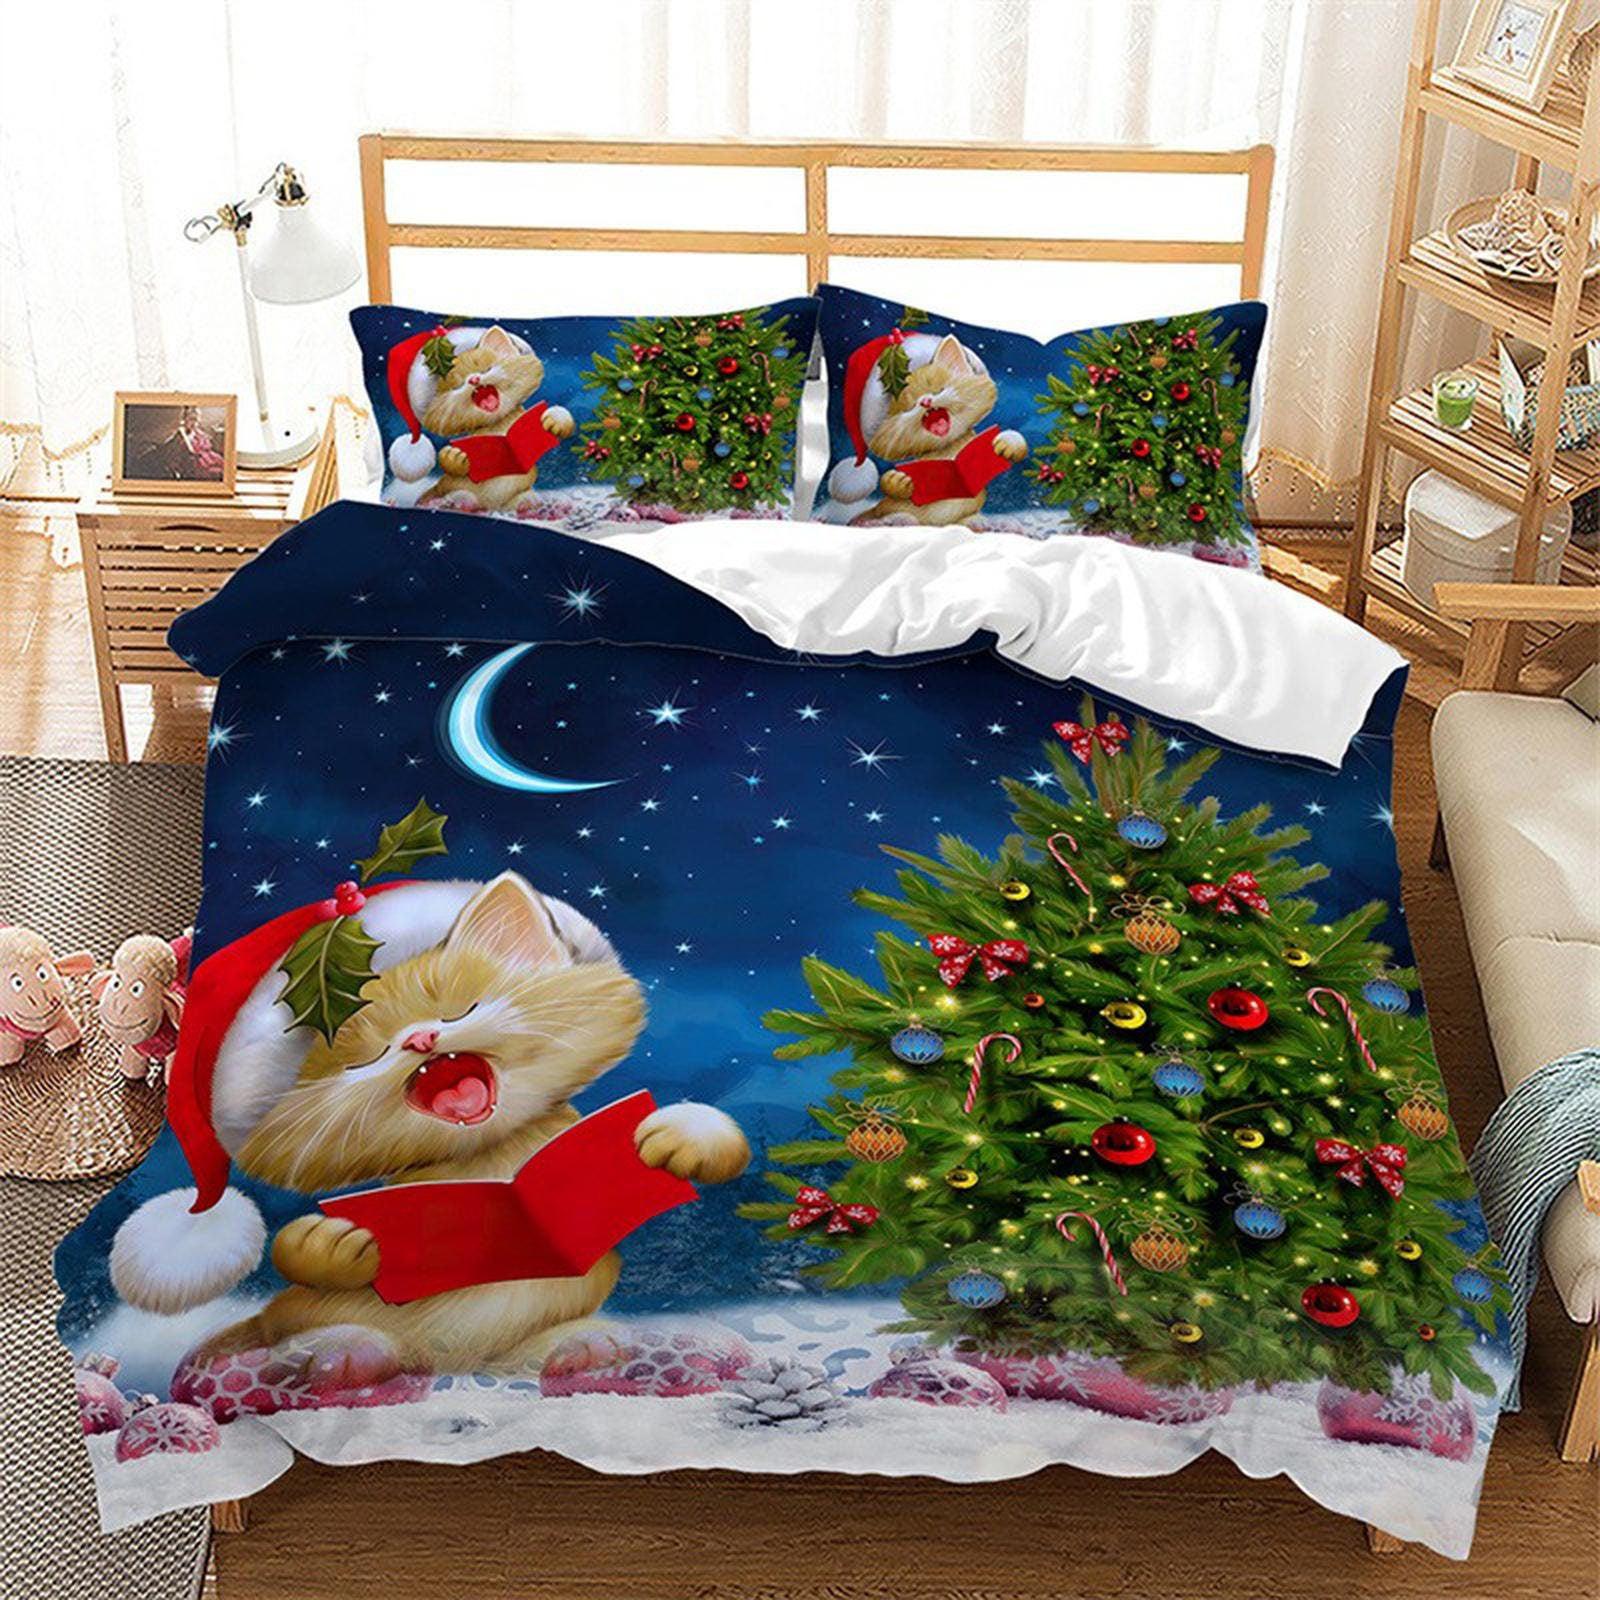 daintyduvet Cute Cat Christmas bedding & pillowcase holiday gift duvet cover king queen full twin toddler bedding baby Christmas farmhouse decor